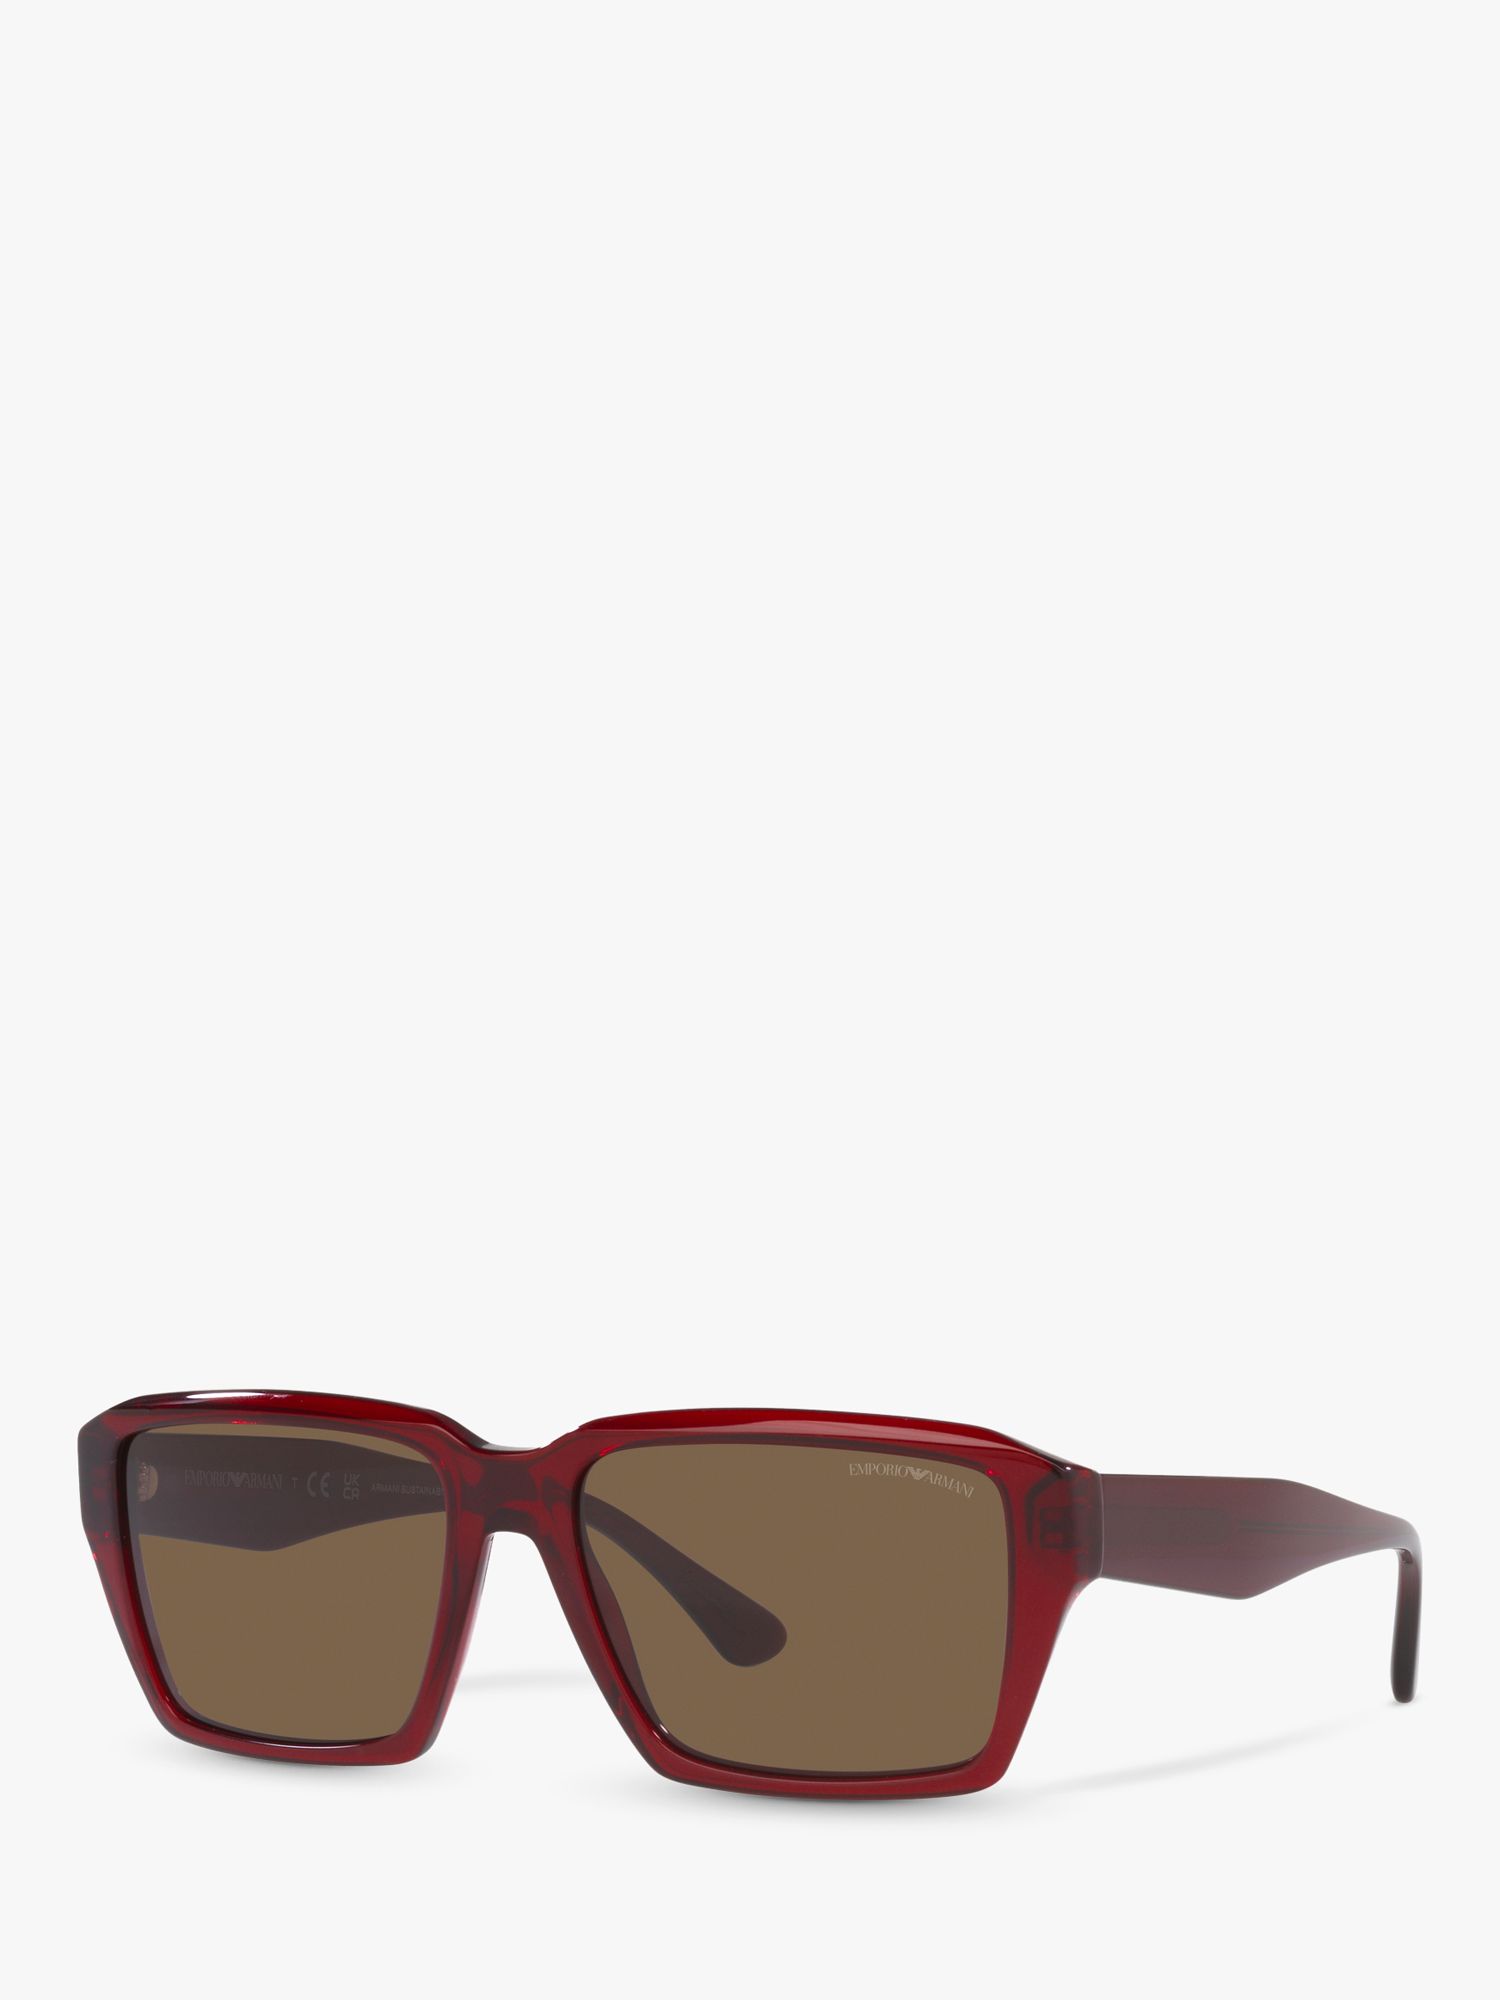 Emporio EA4186 Men's Rectangular Sunglasses, Transparent Red/Brown at & Partners